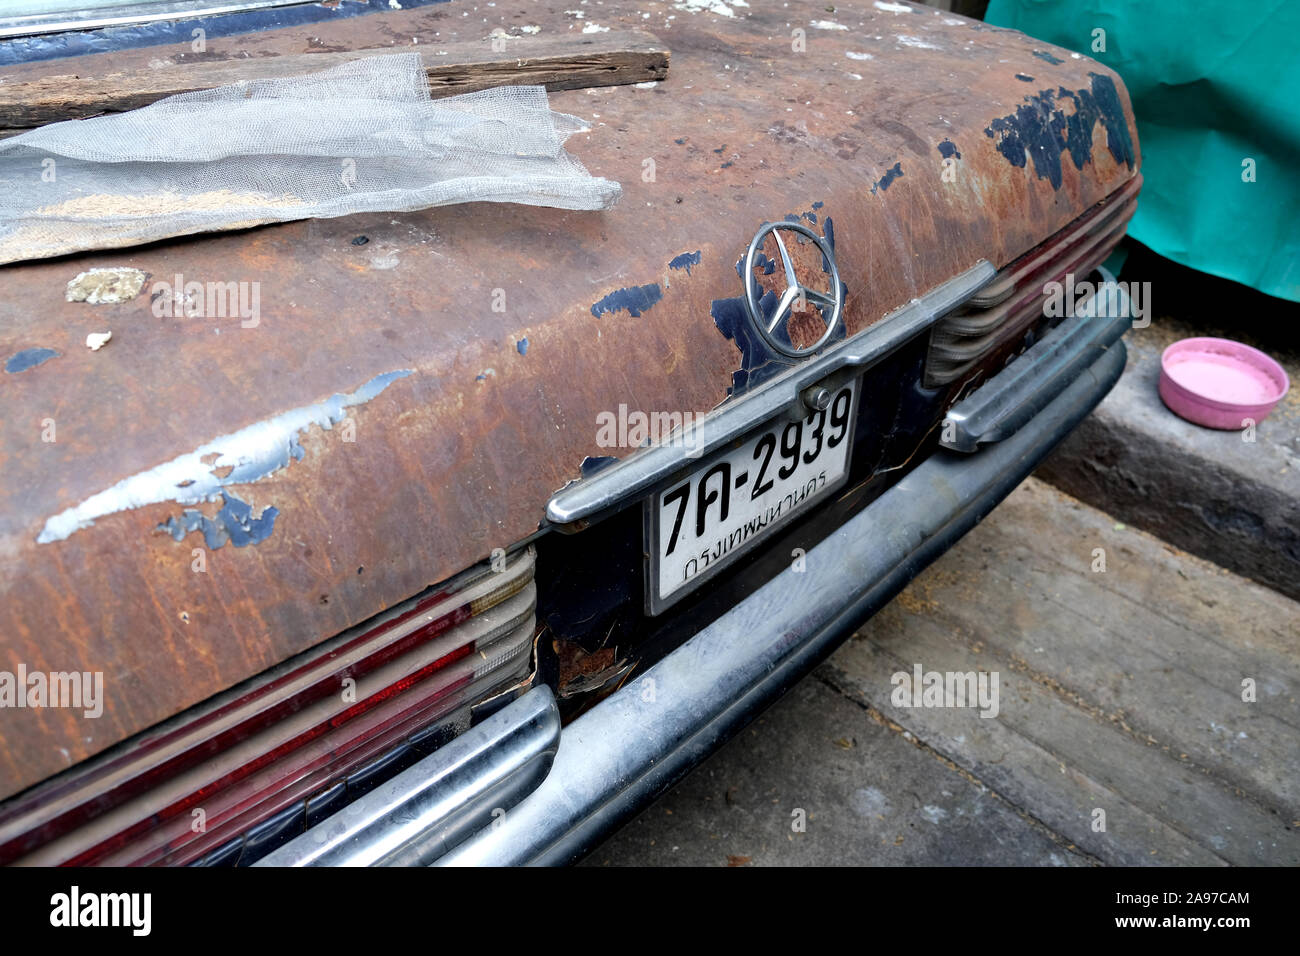 Rear boot-mounted Mercedes 3 Point Star emblem on street- abandoned Mercedes classic car, Bangkok, Thailand Stock Photo